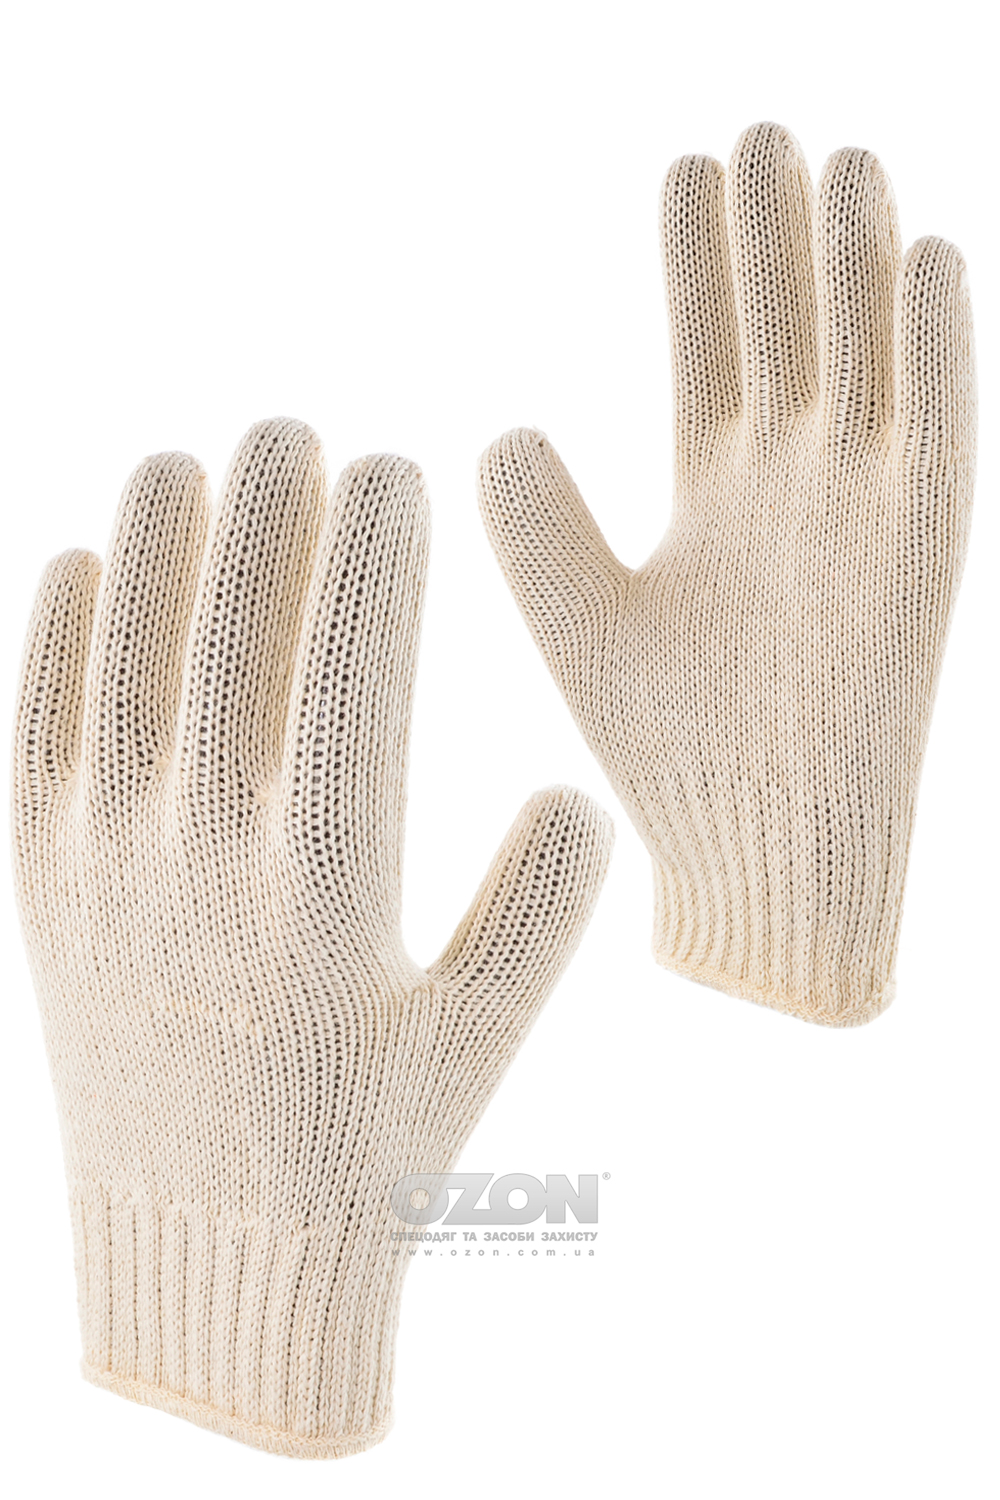 Трикотажные перчатки ПРЕМИУМ 100% х/б - Фото 1